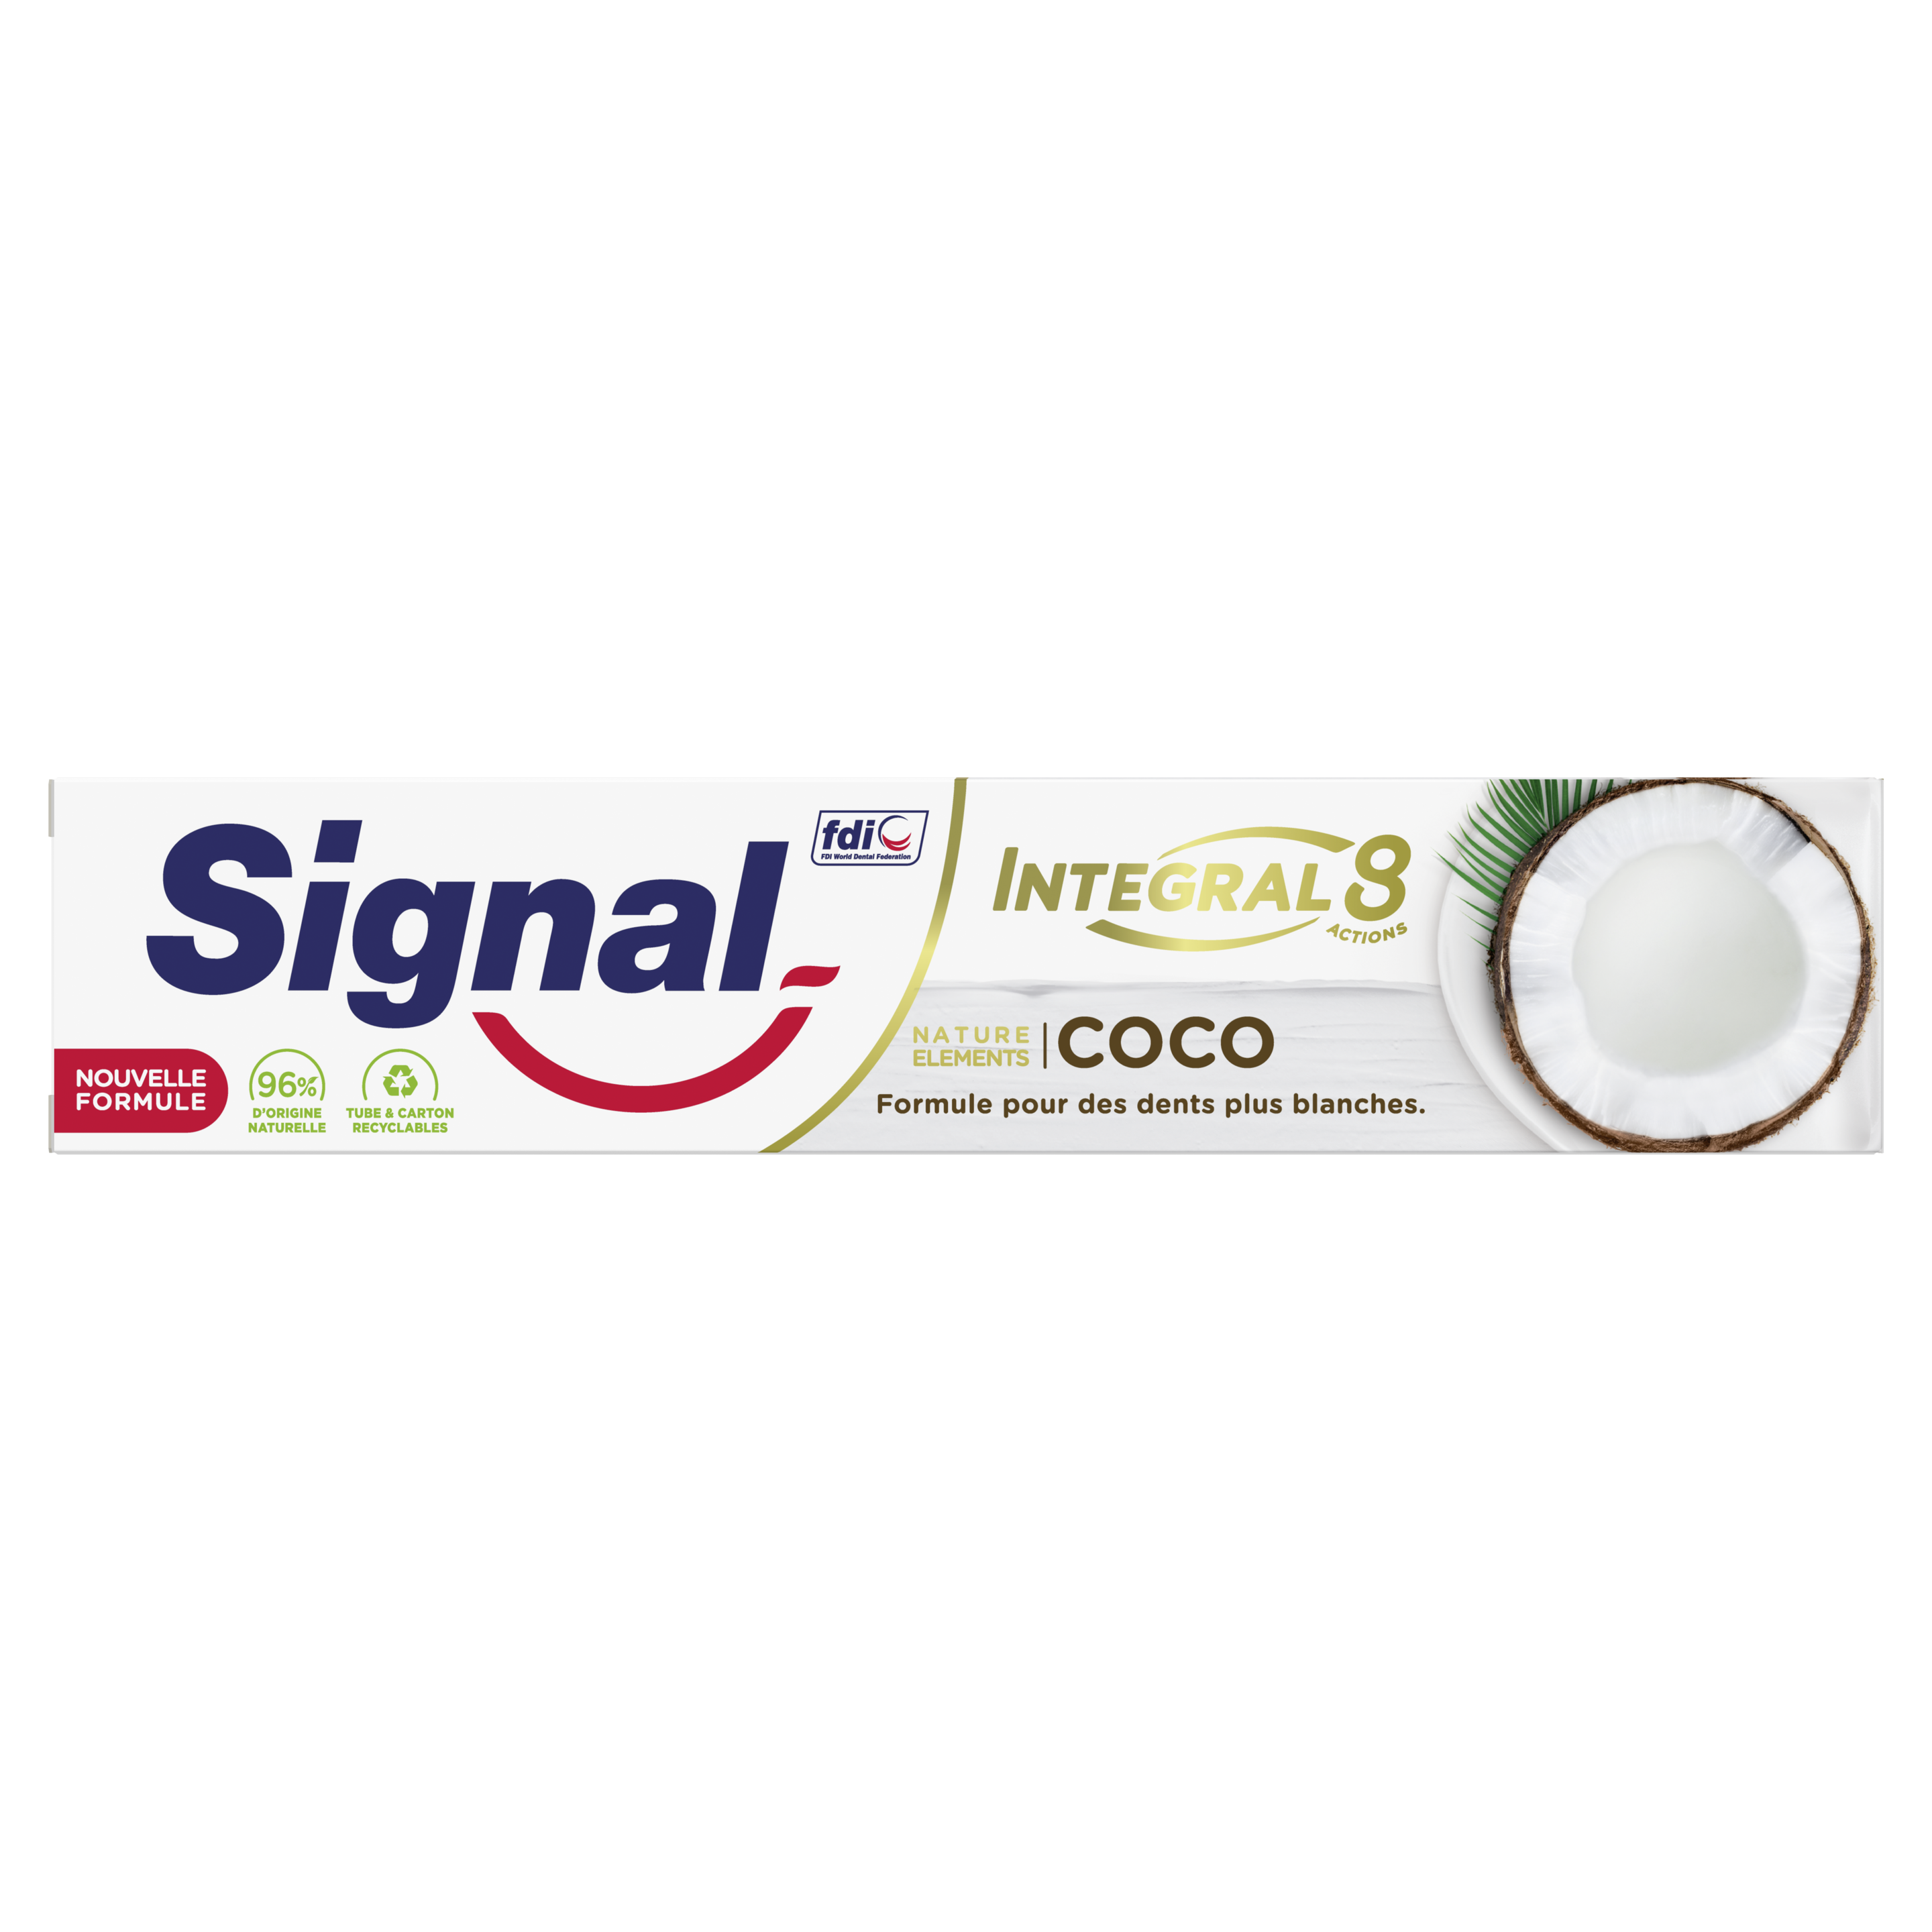 Dentifrice Signal Integral 8 Nature Elements Coco Blancheur Formule Antibactérienne